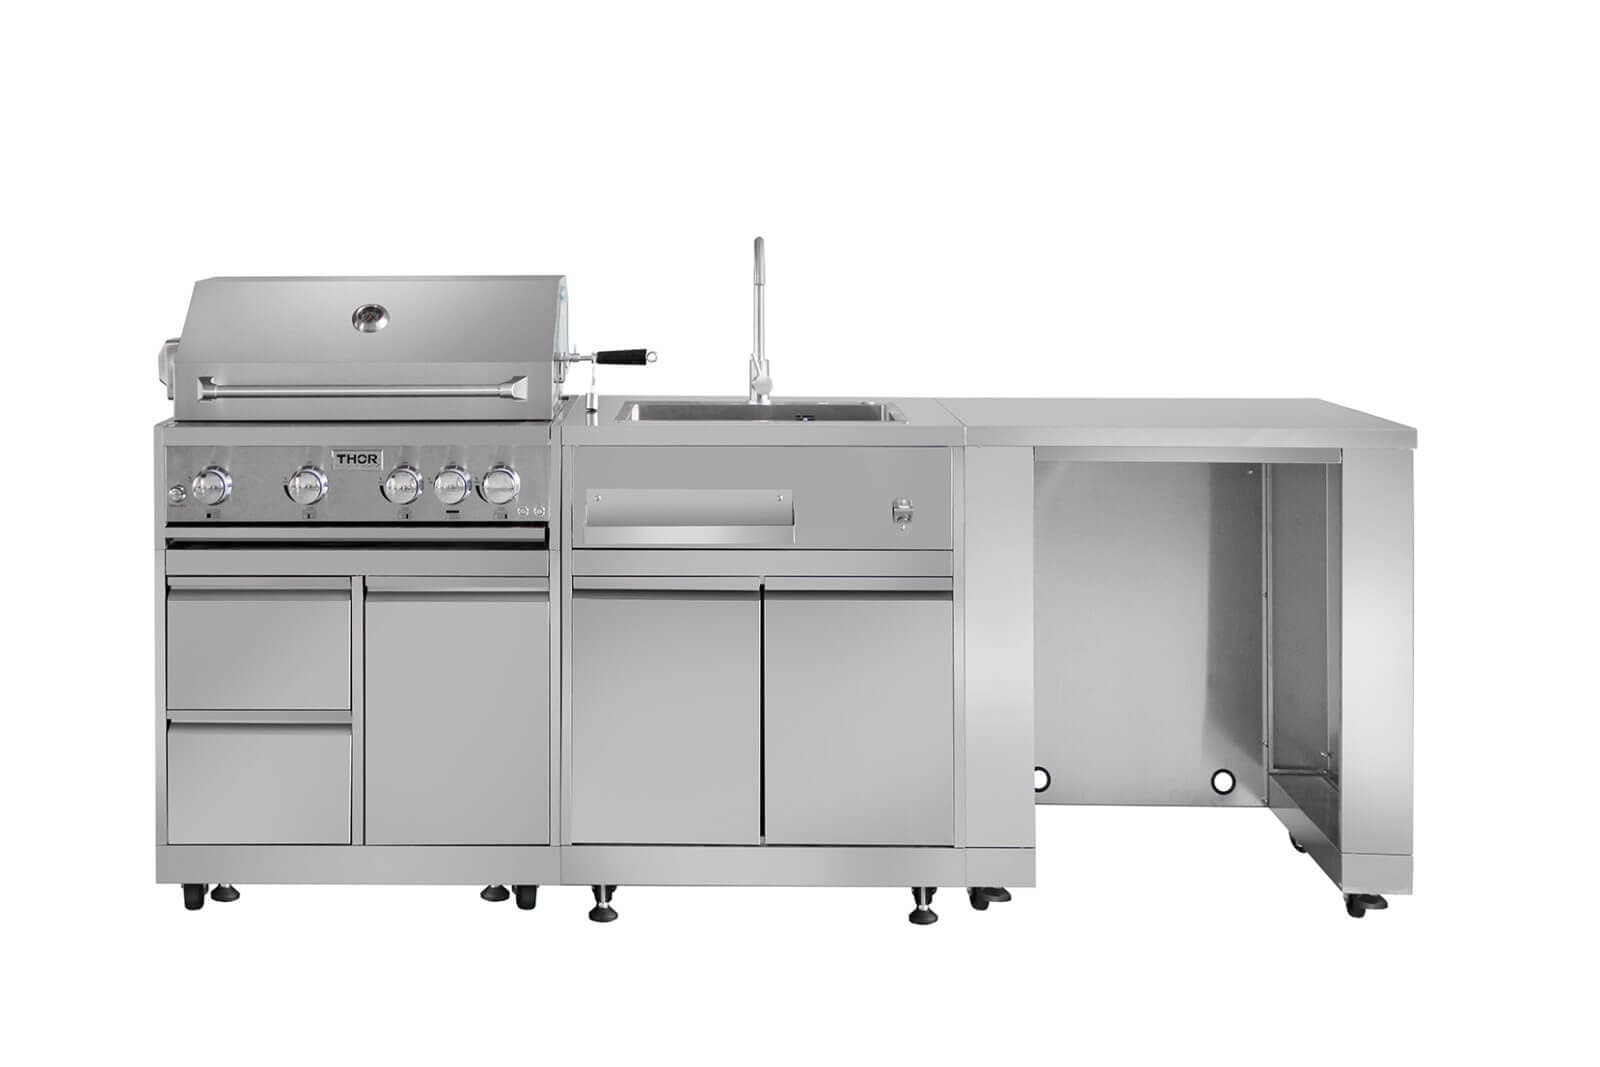 Thor Kitchen 32 Inch Built-In Liquid Propane Grill MK04SS304 Outdoor Appliances MK04SS304 Luxury Appliances Direct